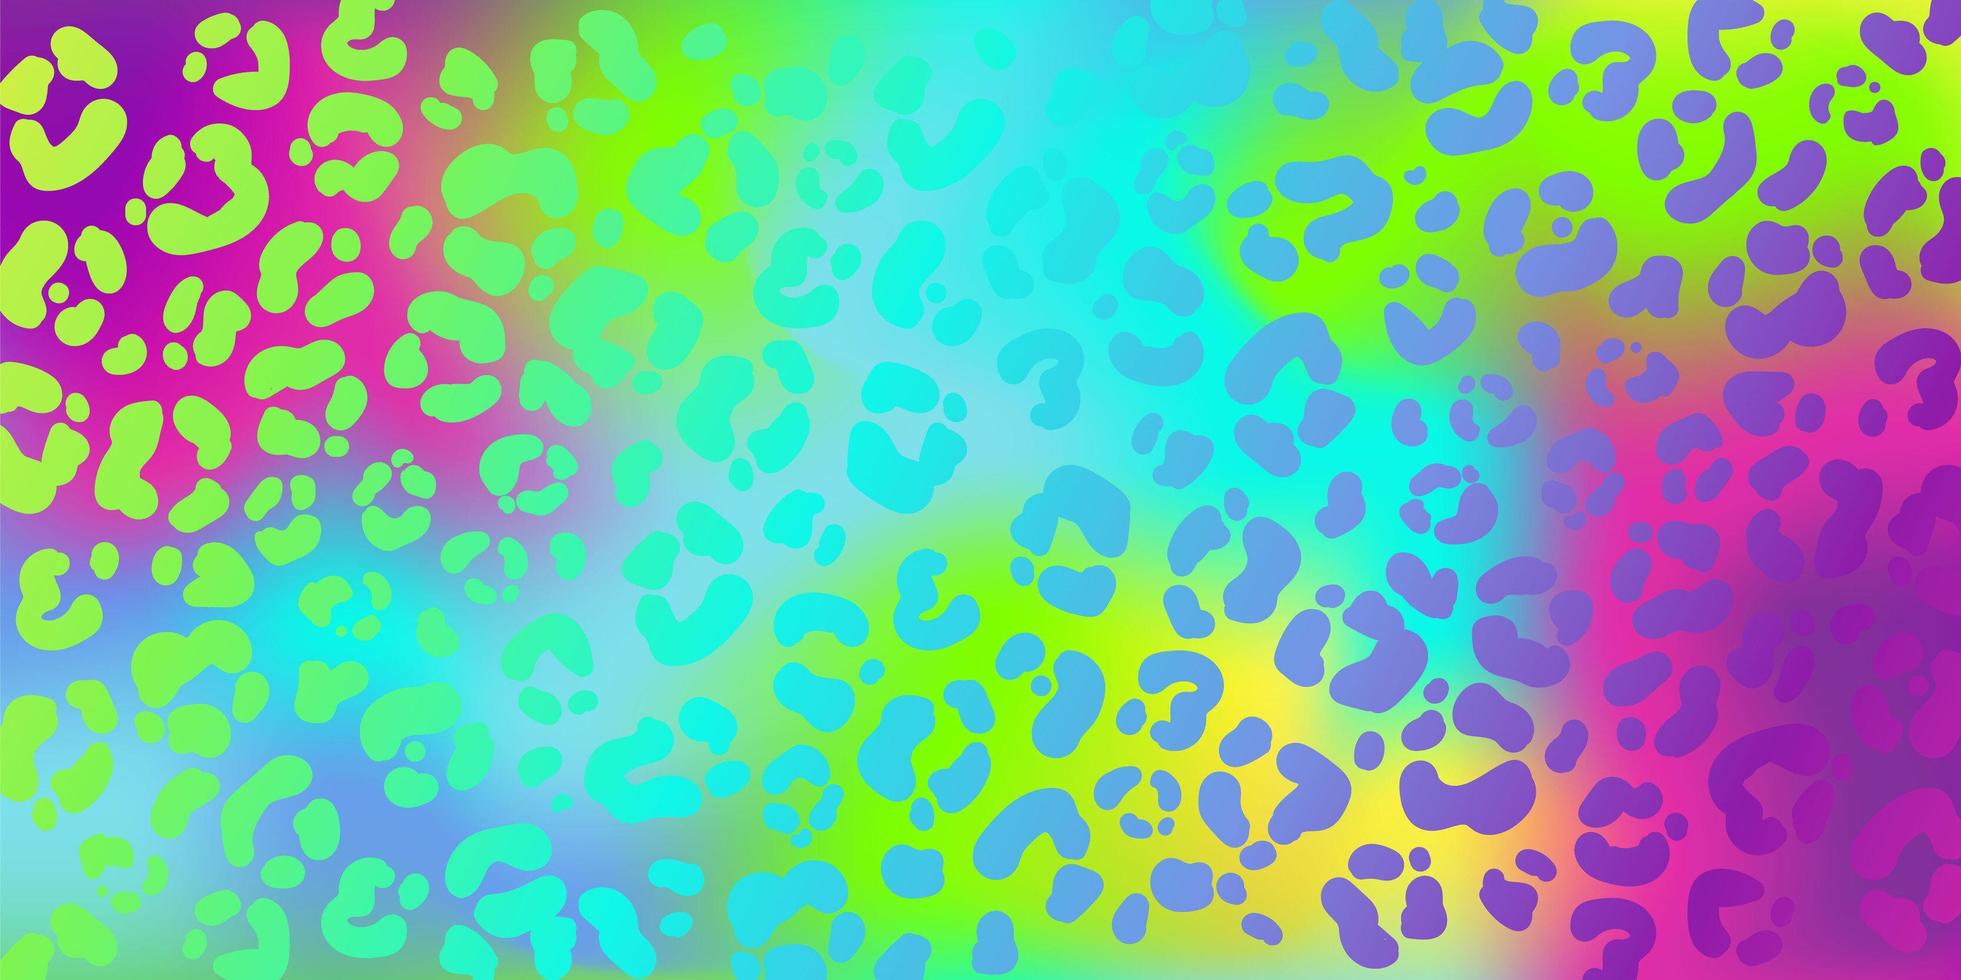 patrón de leopardo de neón. Fondo manchado de colores del arco iris. vector animal print. fondo de pantalla